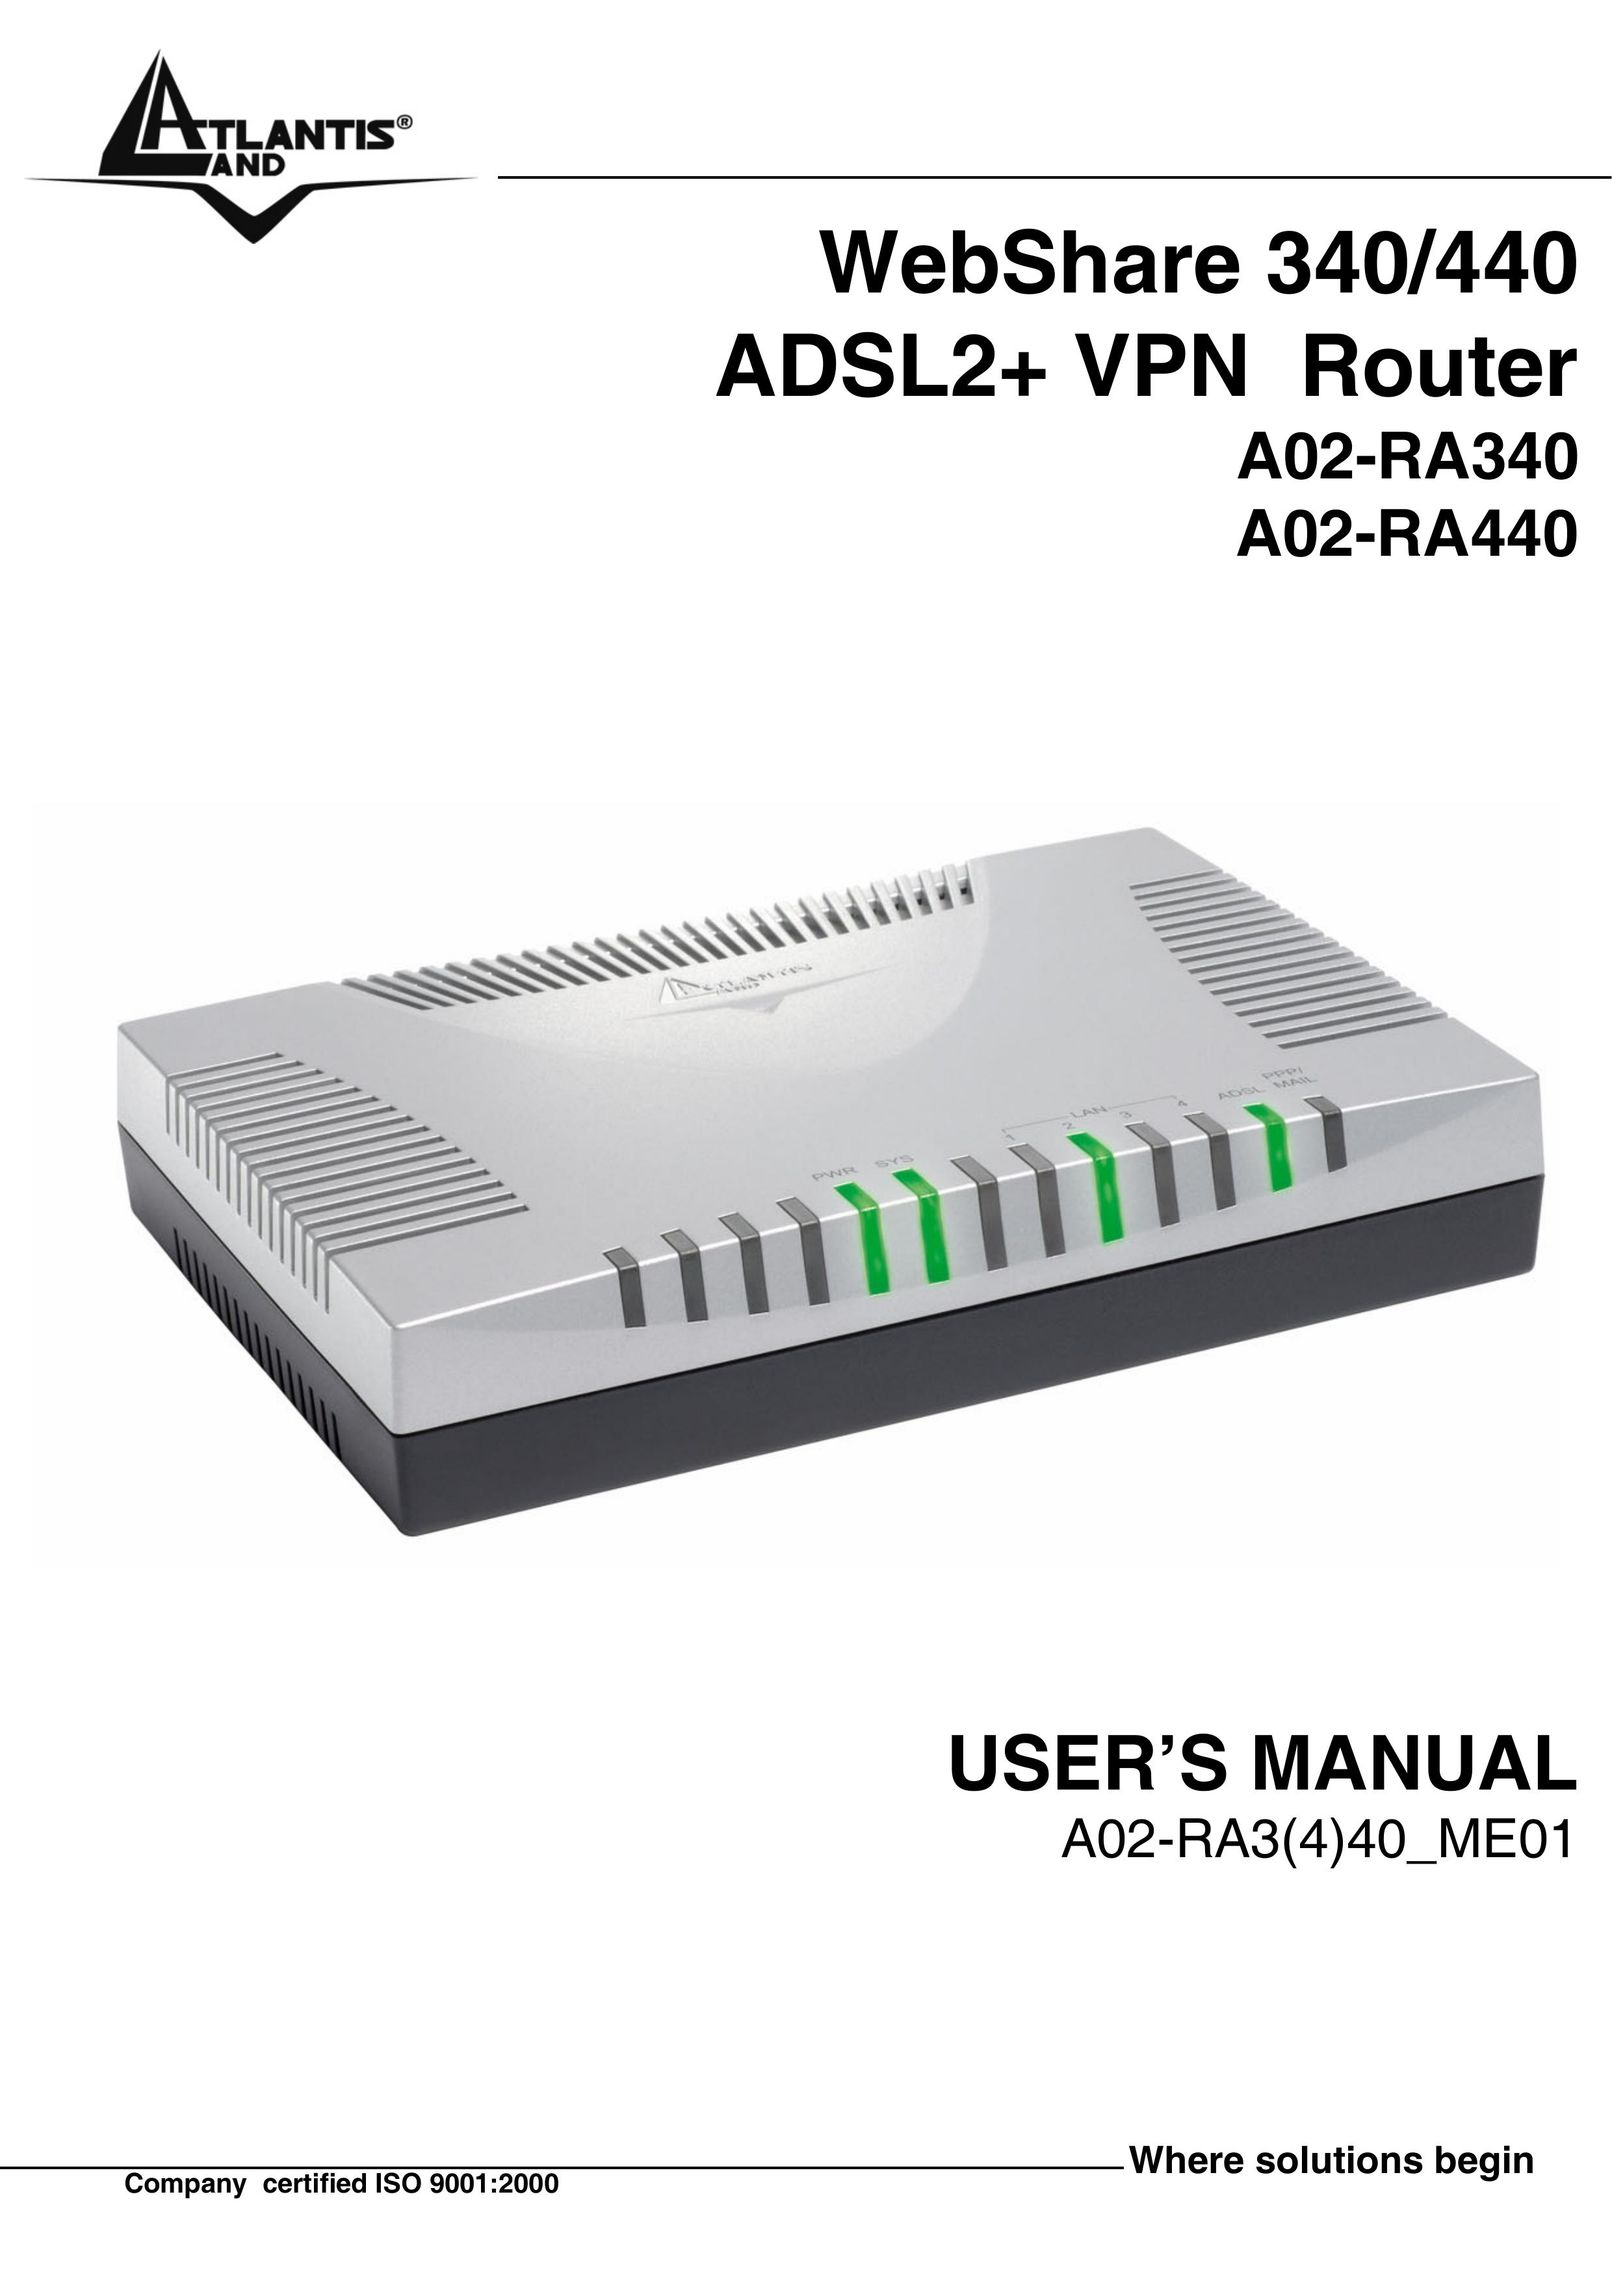 Atlantis Land A02-RA340 Network Router User Manual